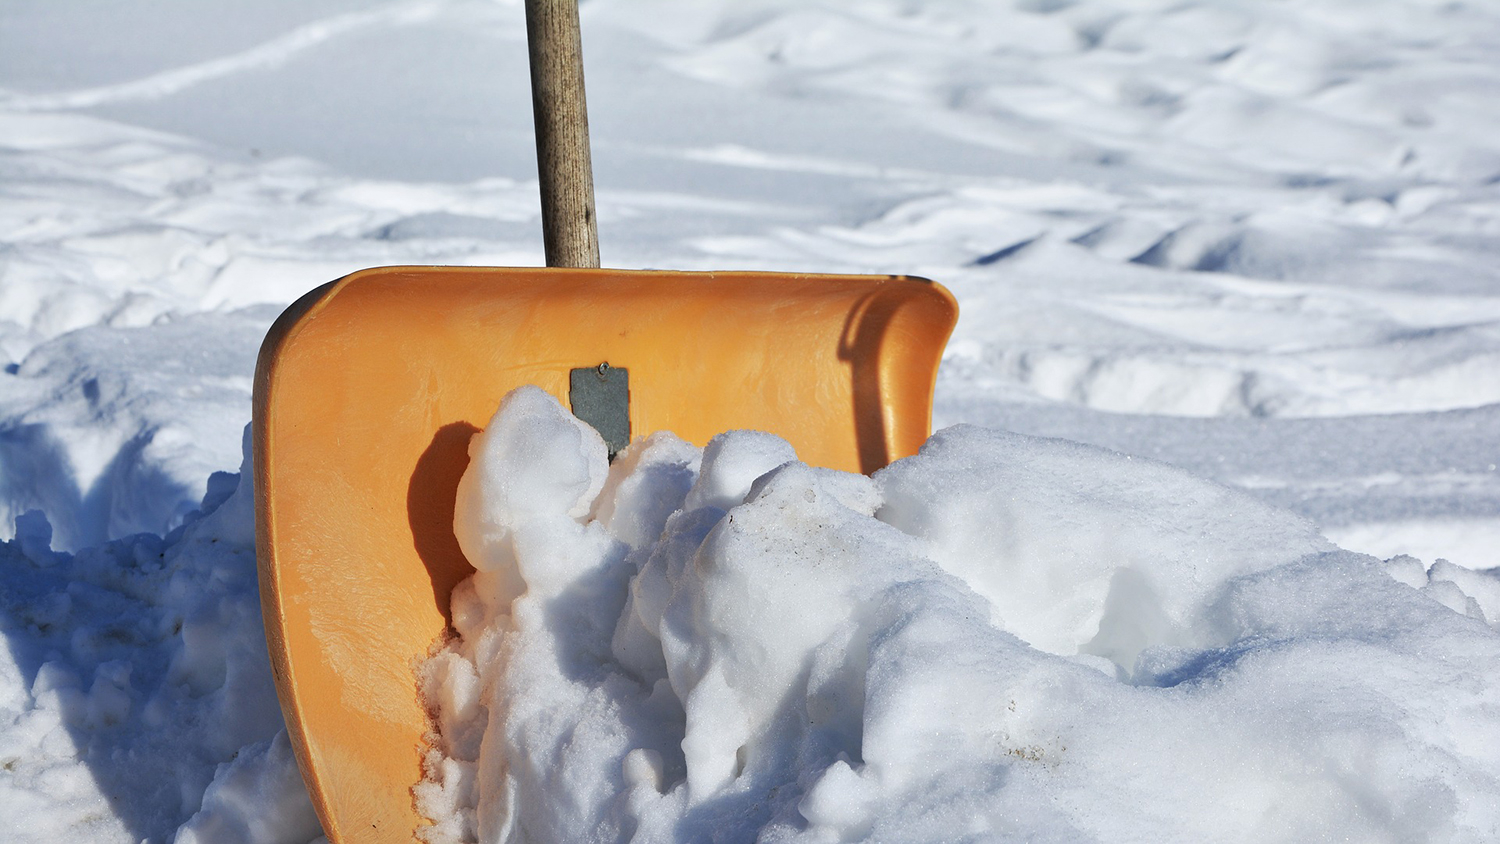 an orange snow shovel cuts through a pile of snow